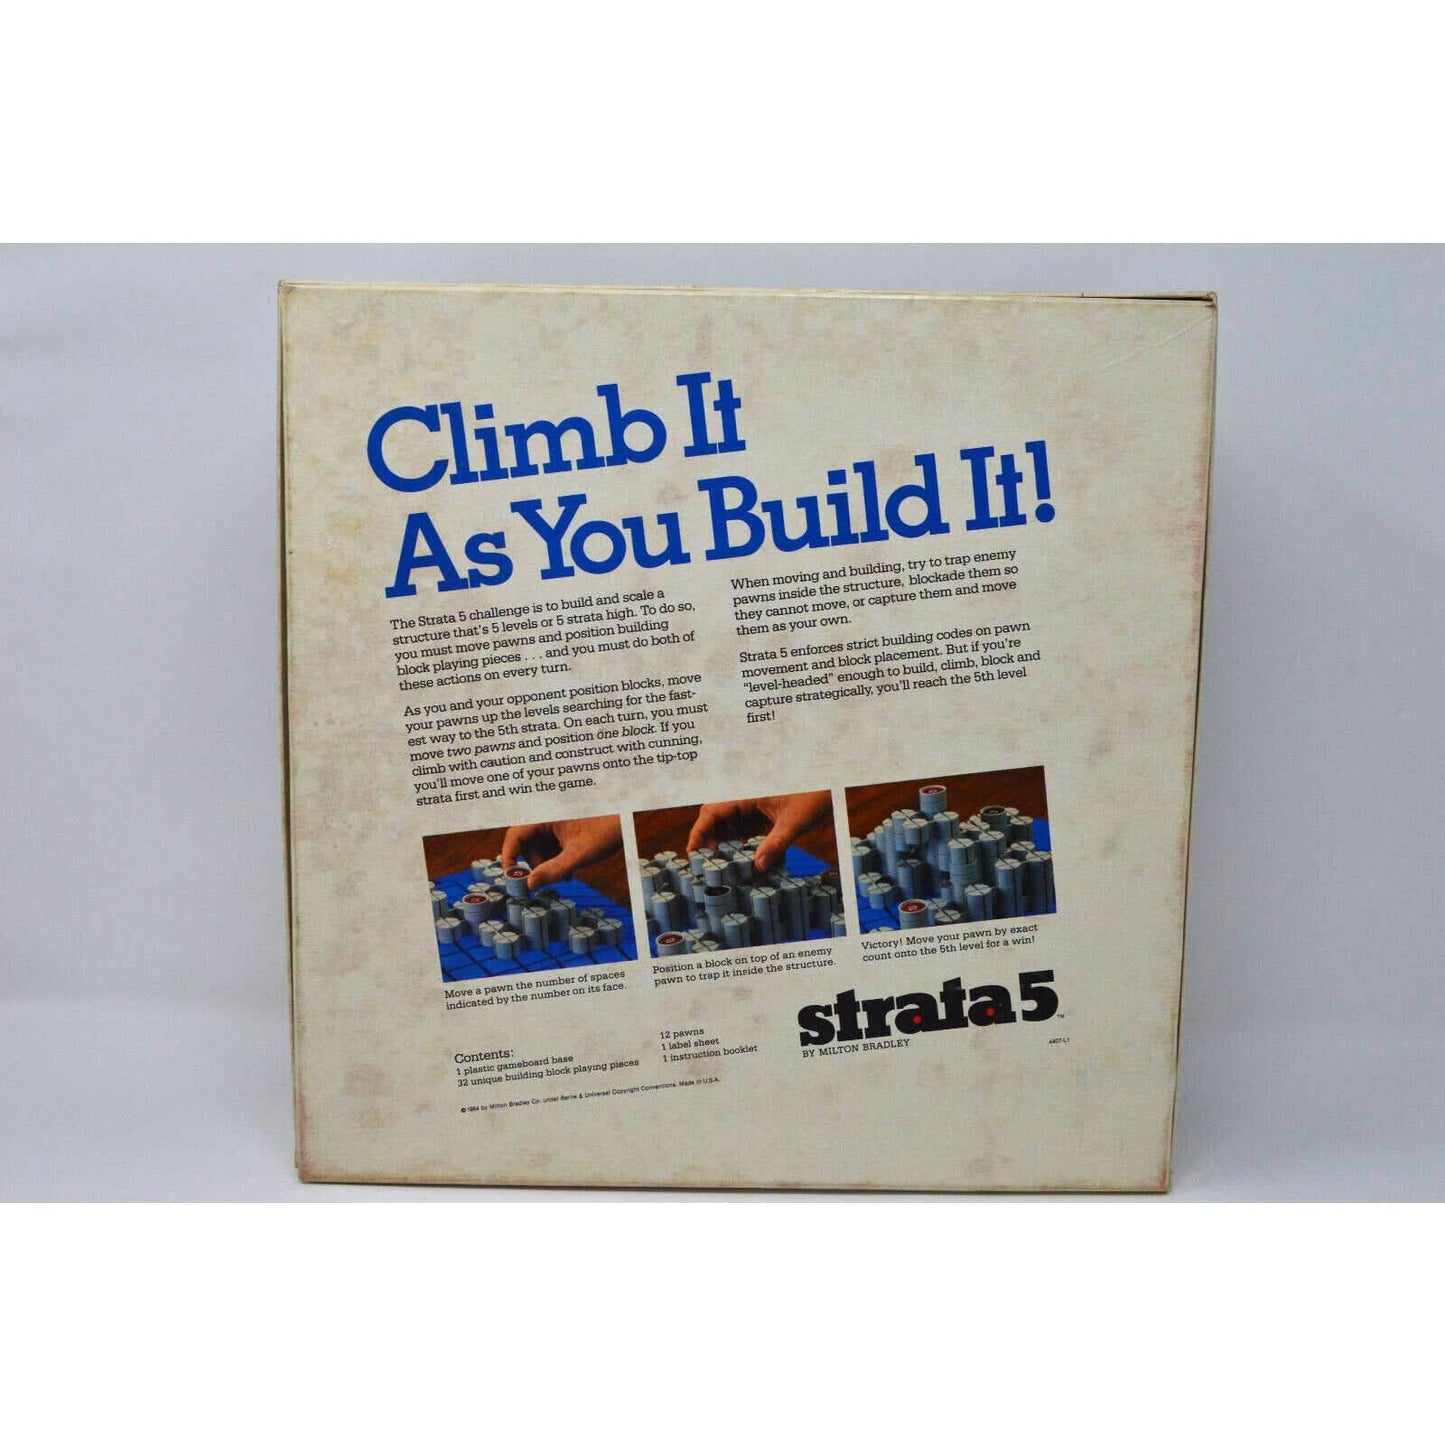 STRATA 5 - 1984 Milton Bradley Board Game, Vintage, Complete